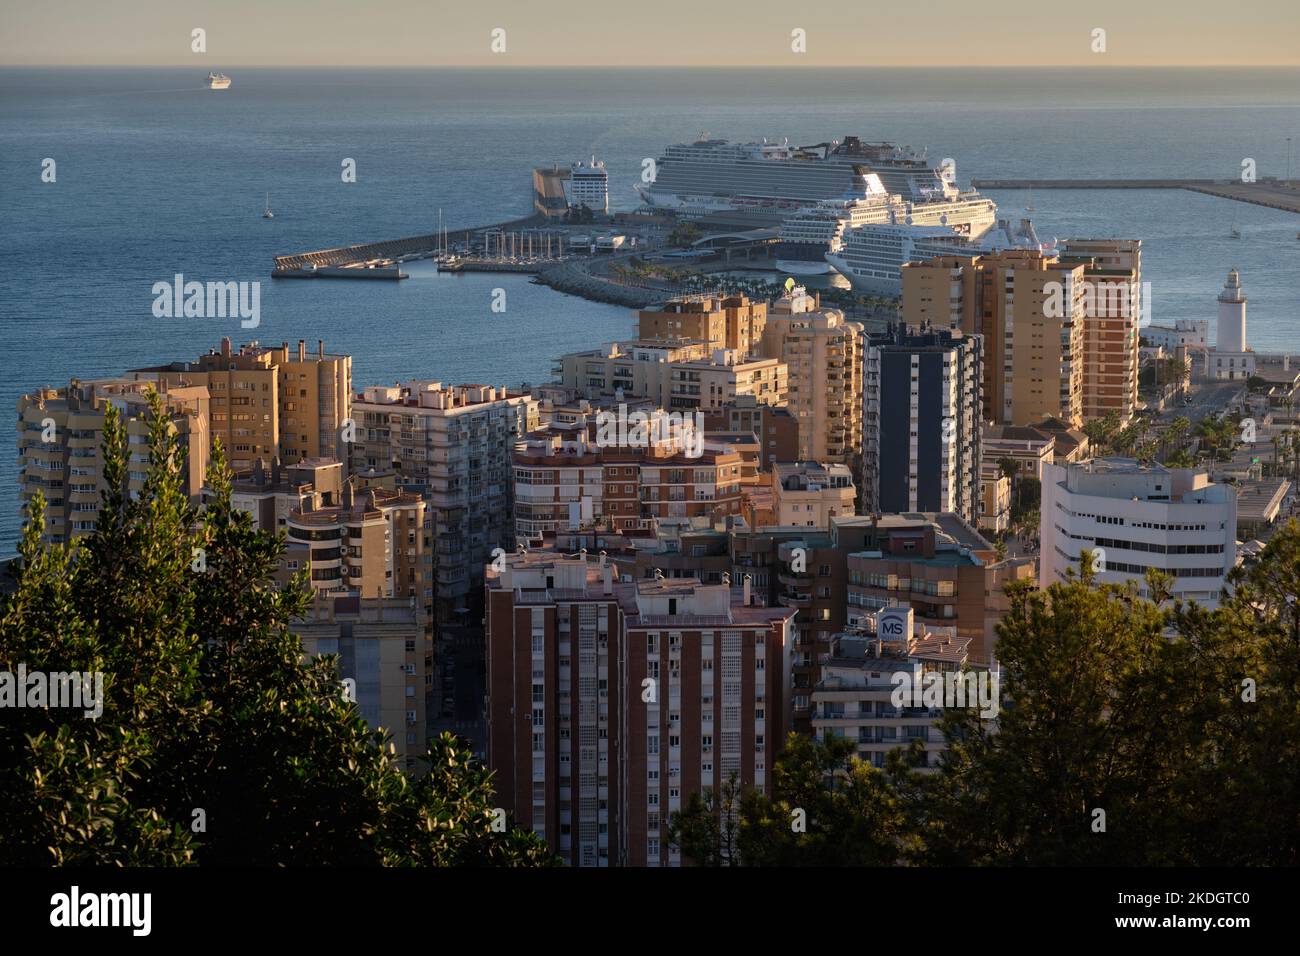 Cruise ships at port of Malaga, Spain. Stock Photo